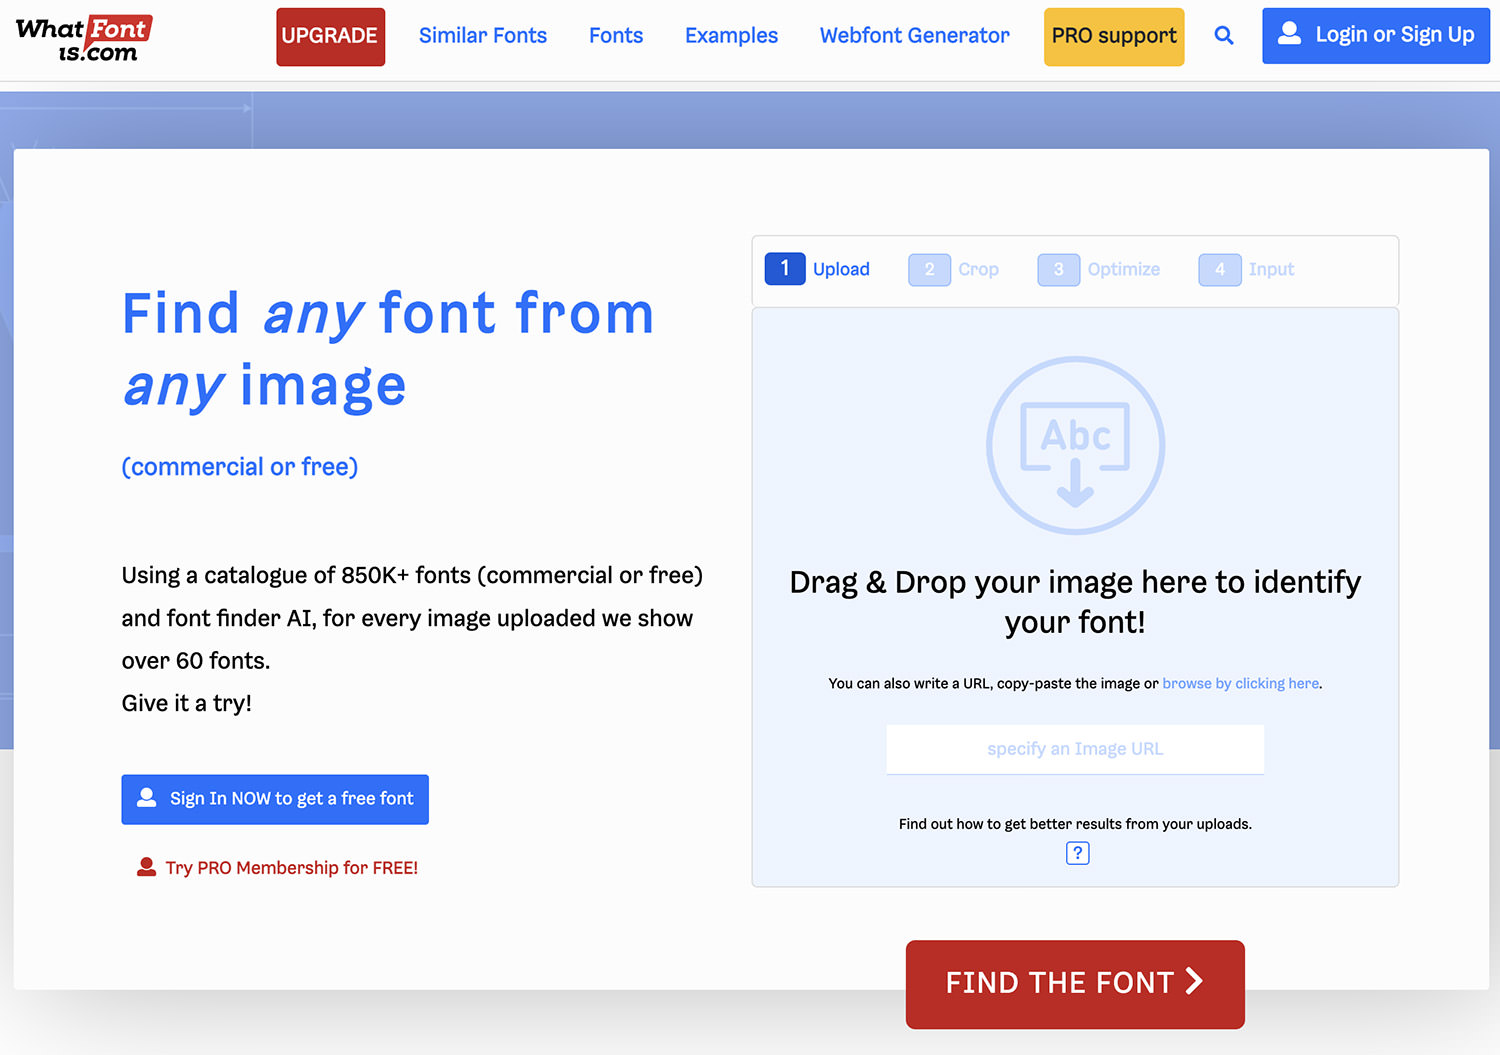 Image displaying WhatFontis.com's platform for identifying fonts